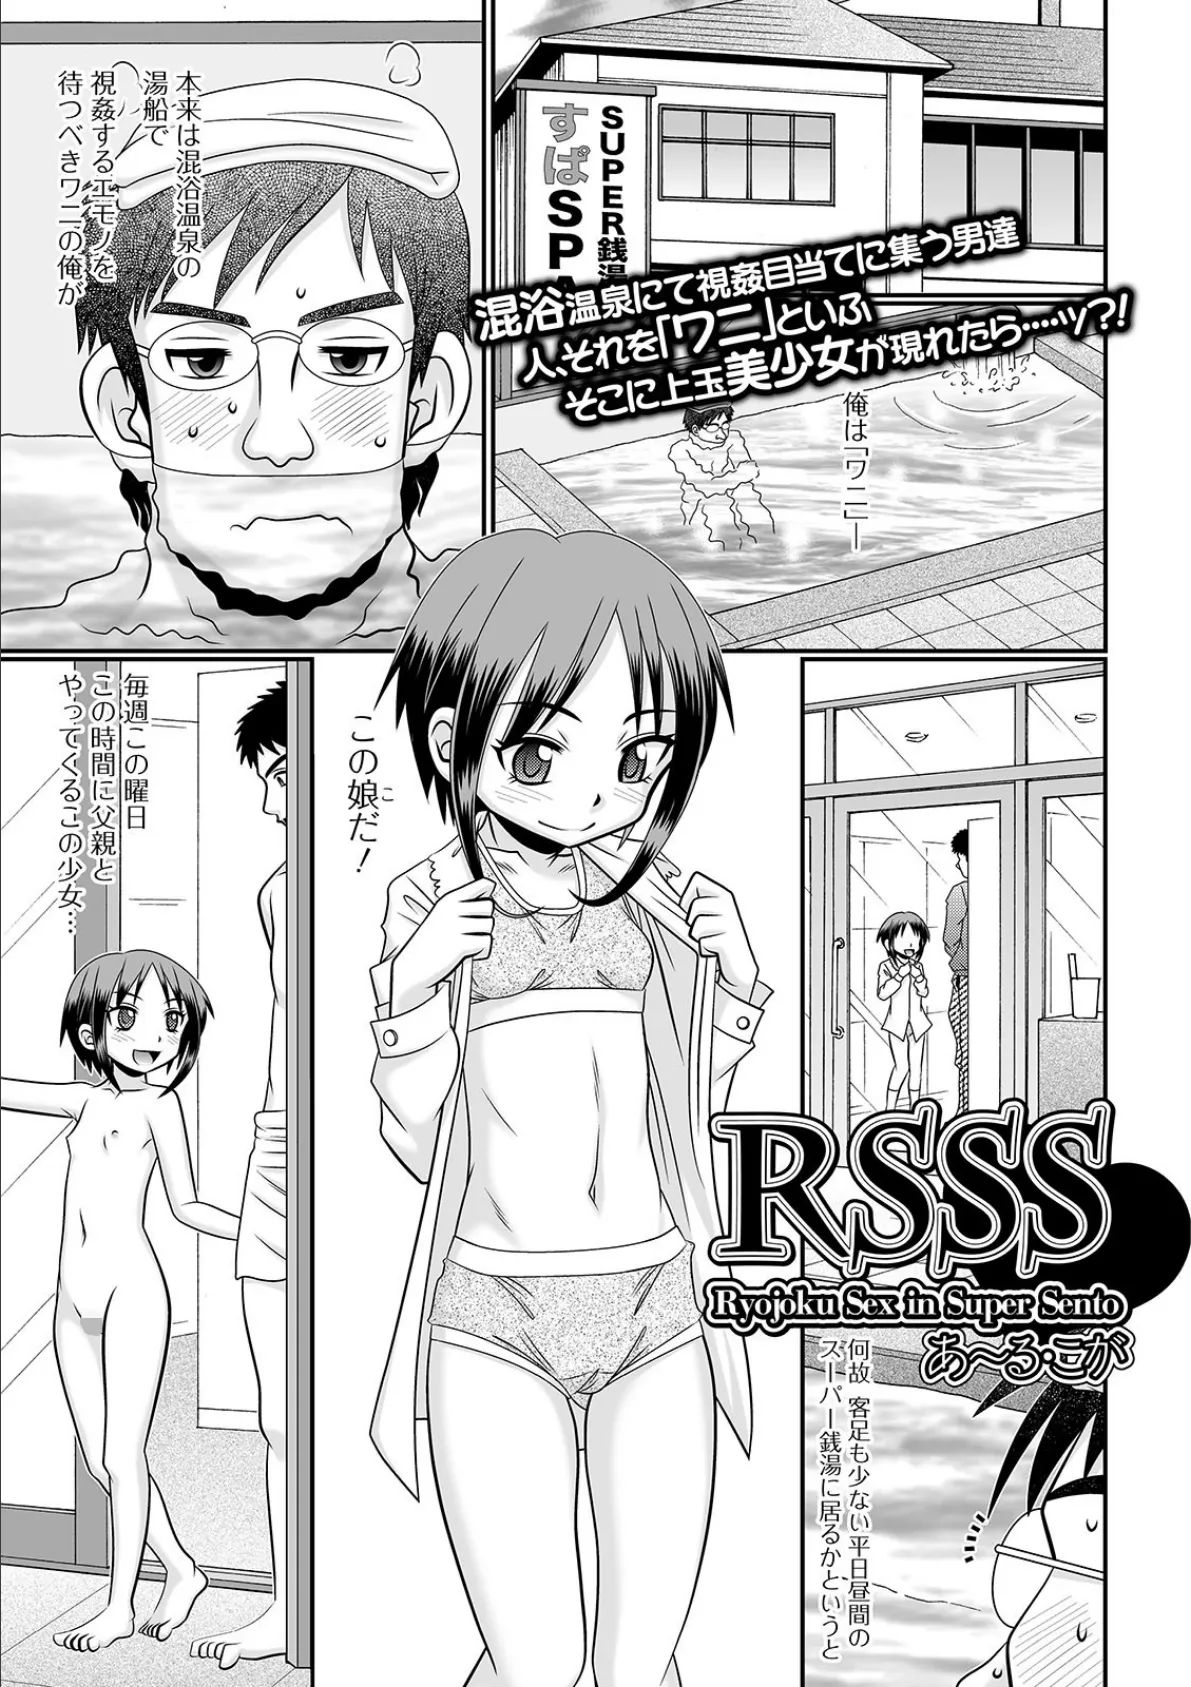 RSSS Ryojoku Sex in Super Sento